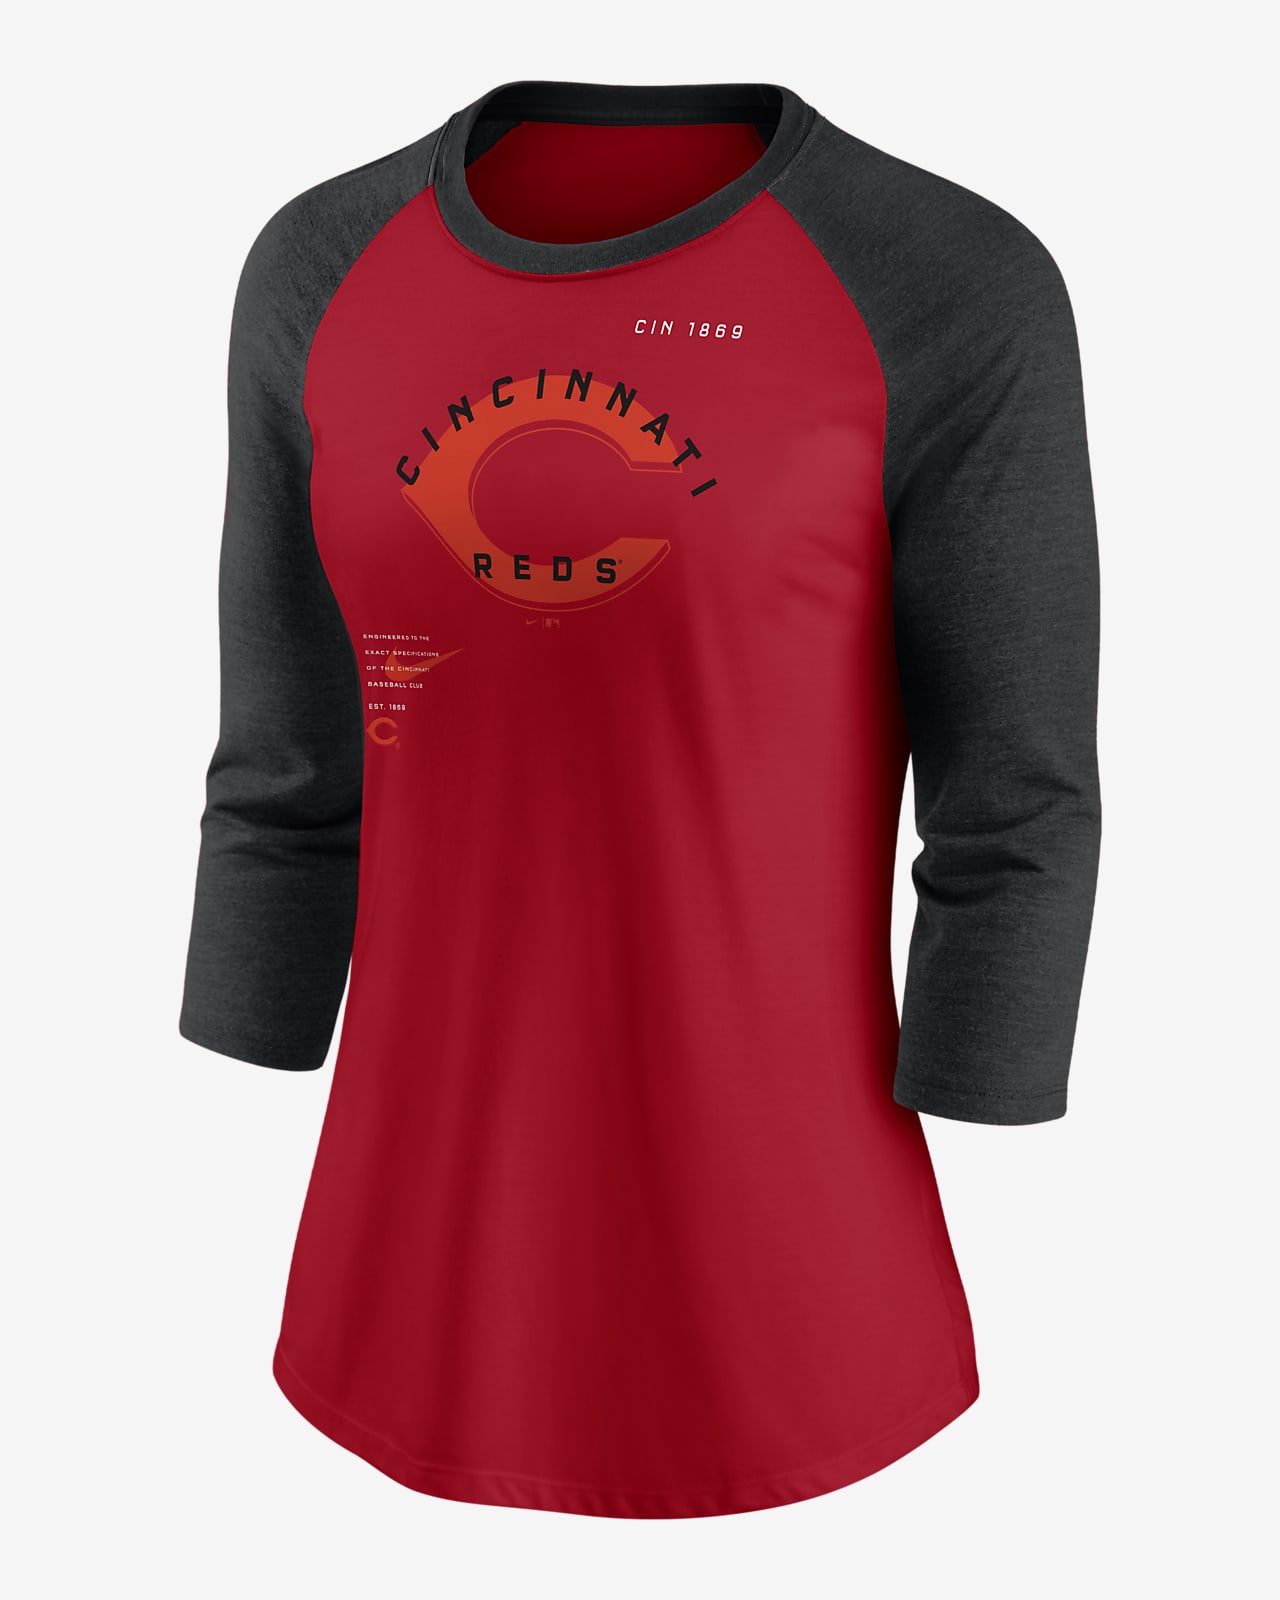 Nike Next Up (MLB Cincinnati Reds) Women's 3/4-Sleeve Top